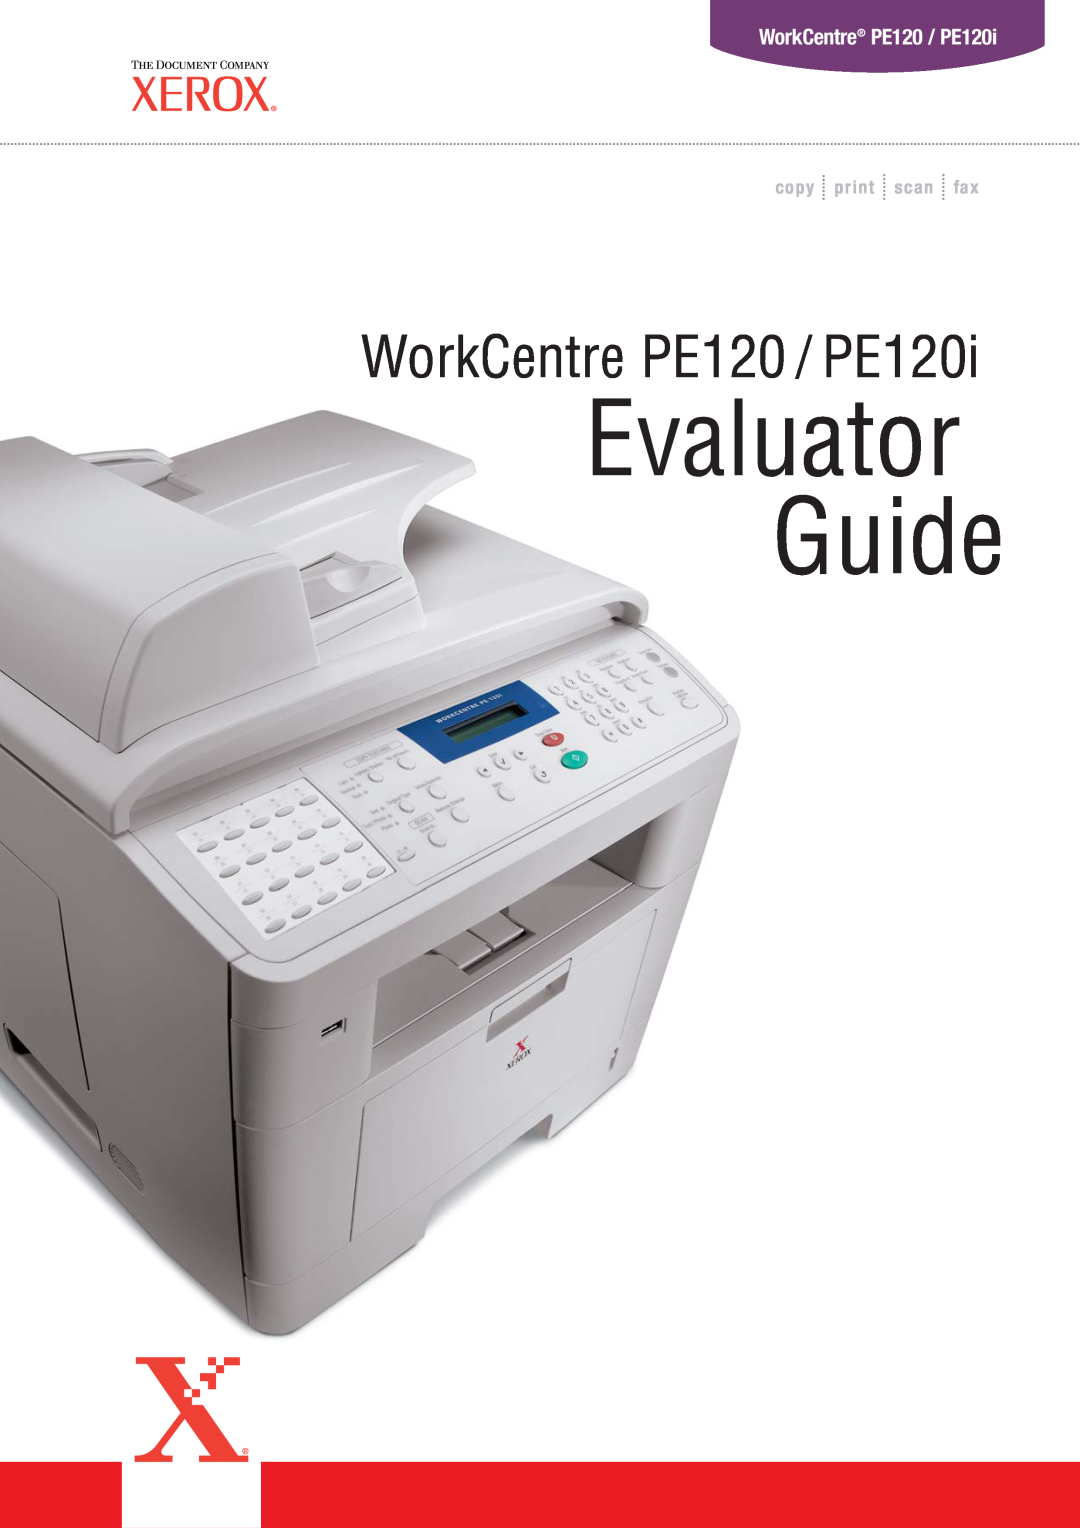 Xerox manual WorkCentre PE120 / PE120i, Evaluator Guide, copy print scan fax 